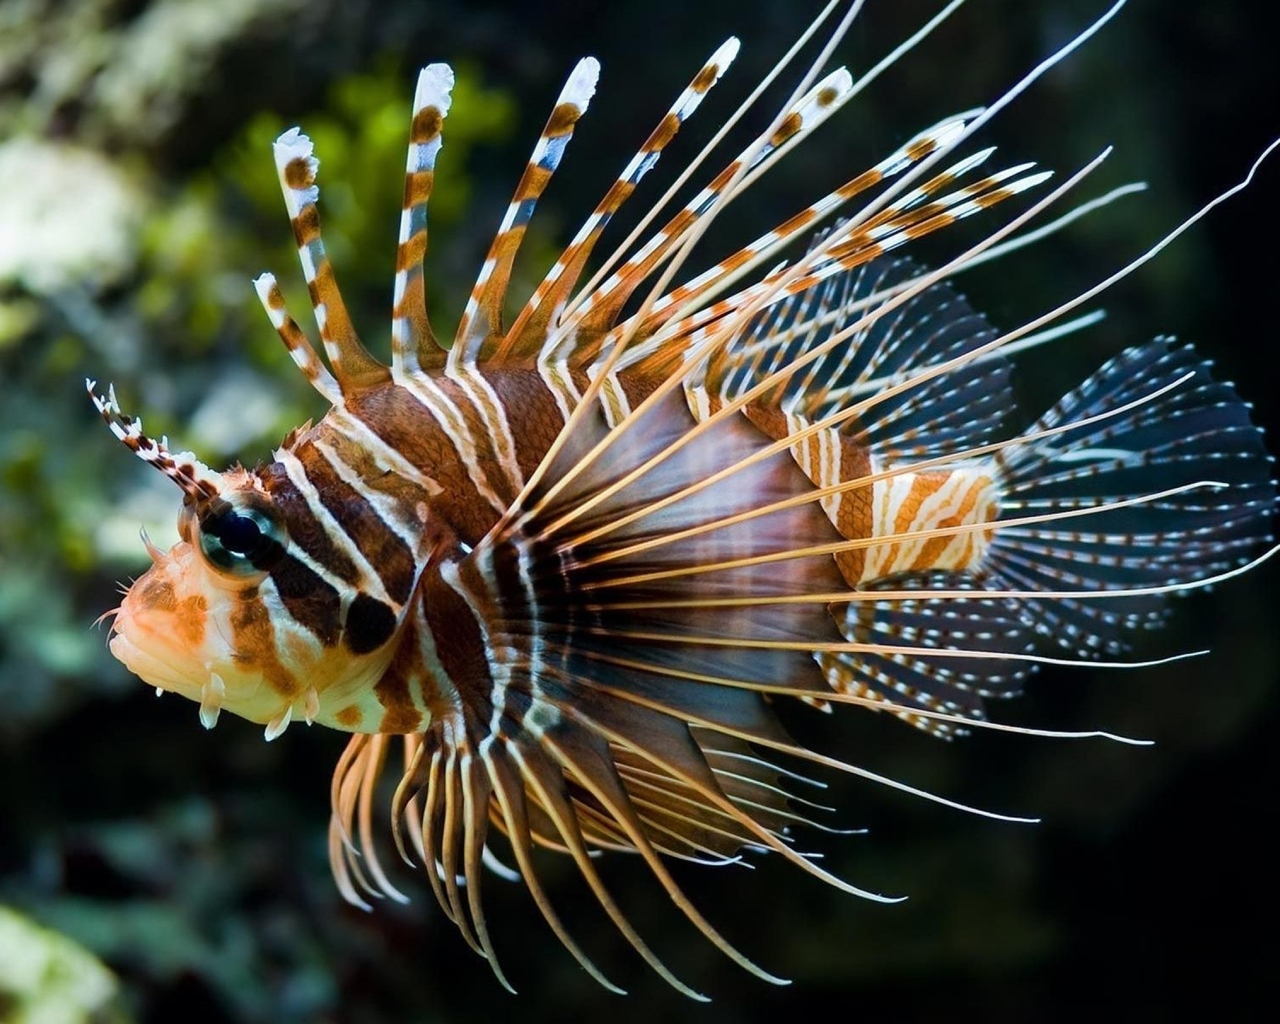 Image: Fish, lionfish, stripes, eye, fins